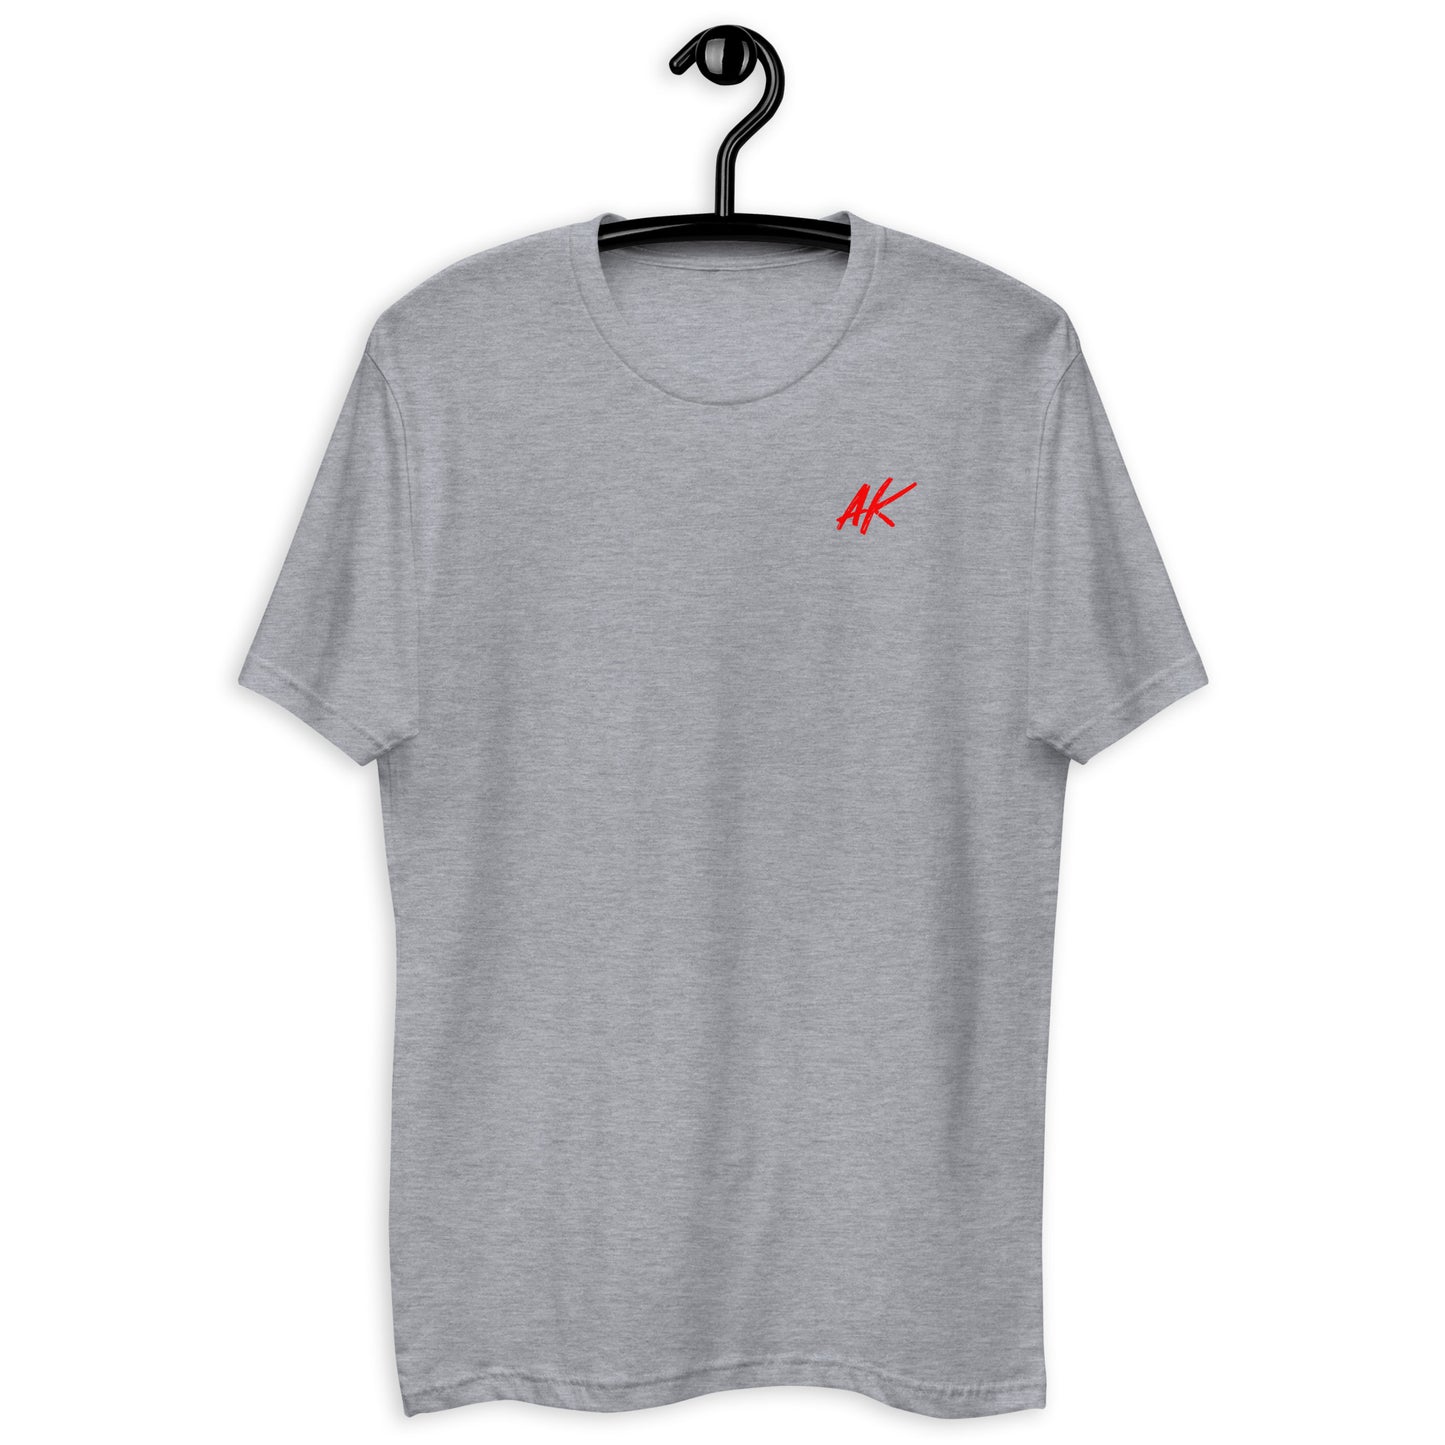 M| AK 3x T-shirt - red